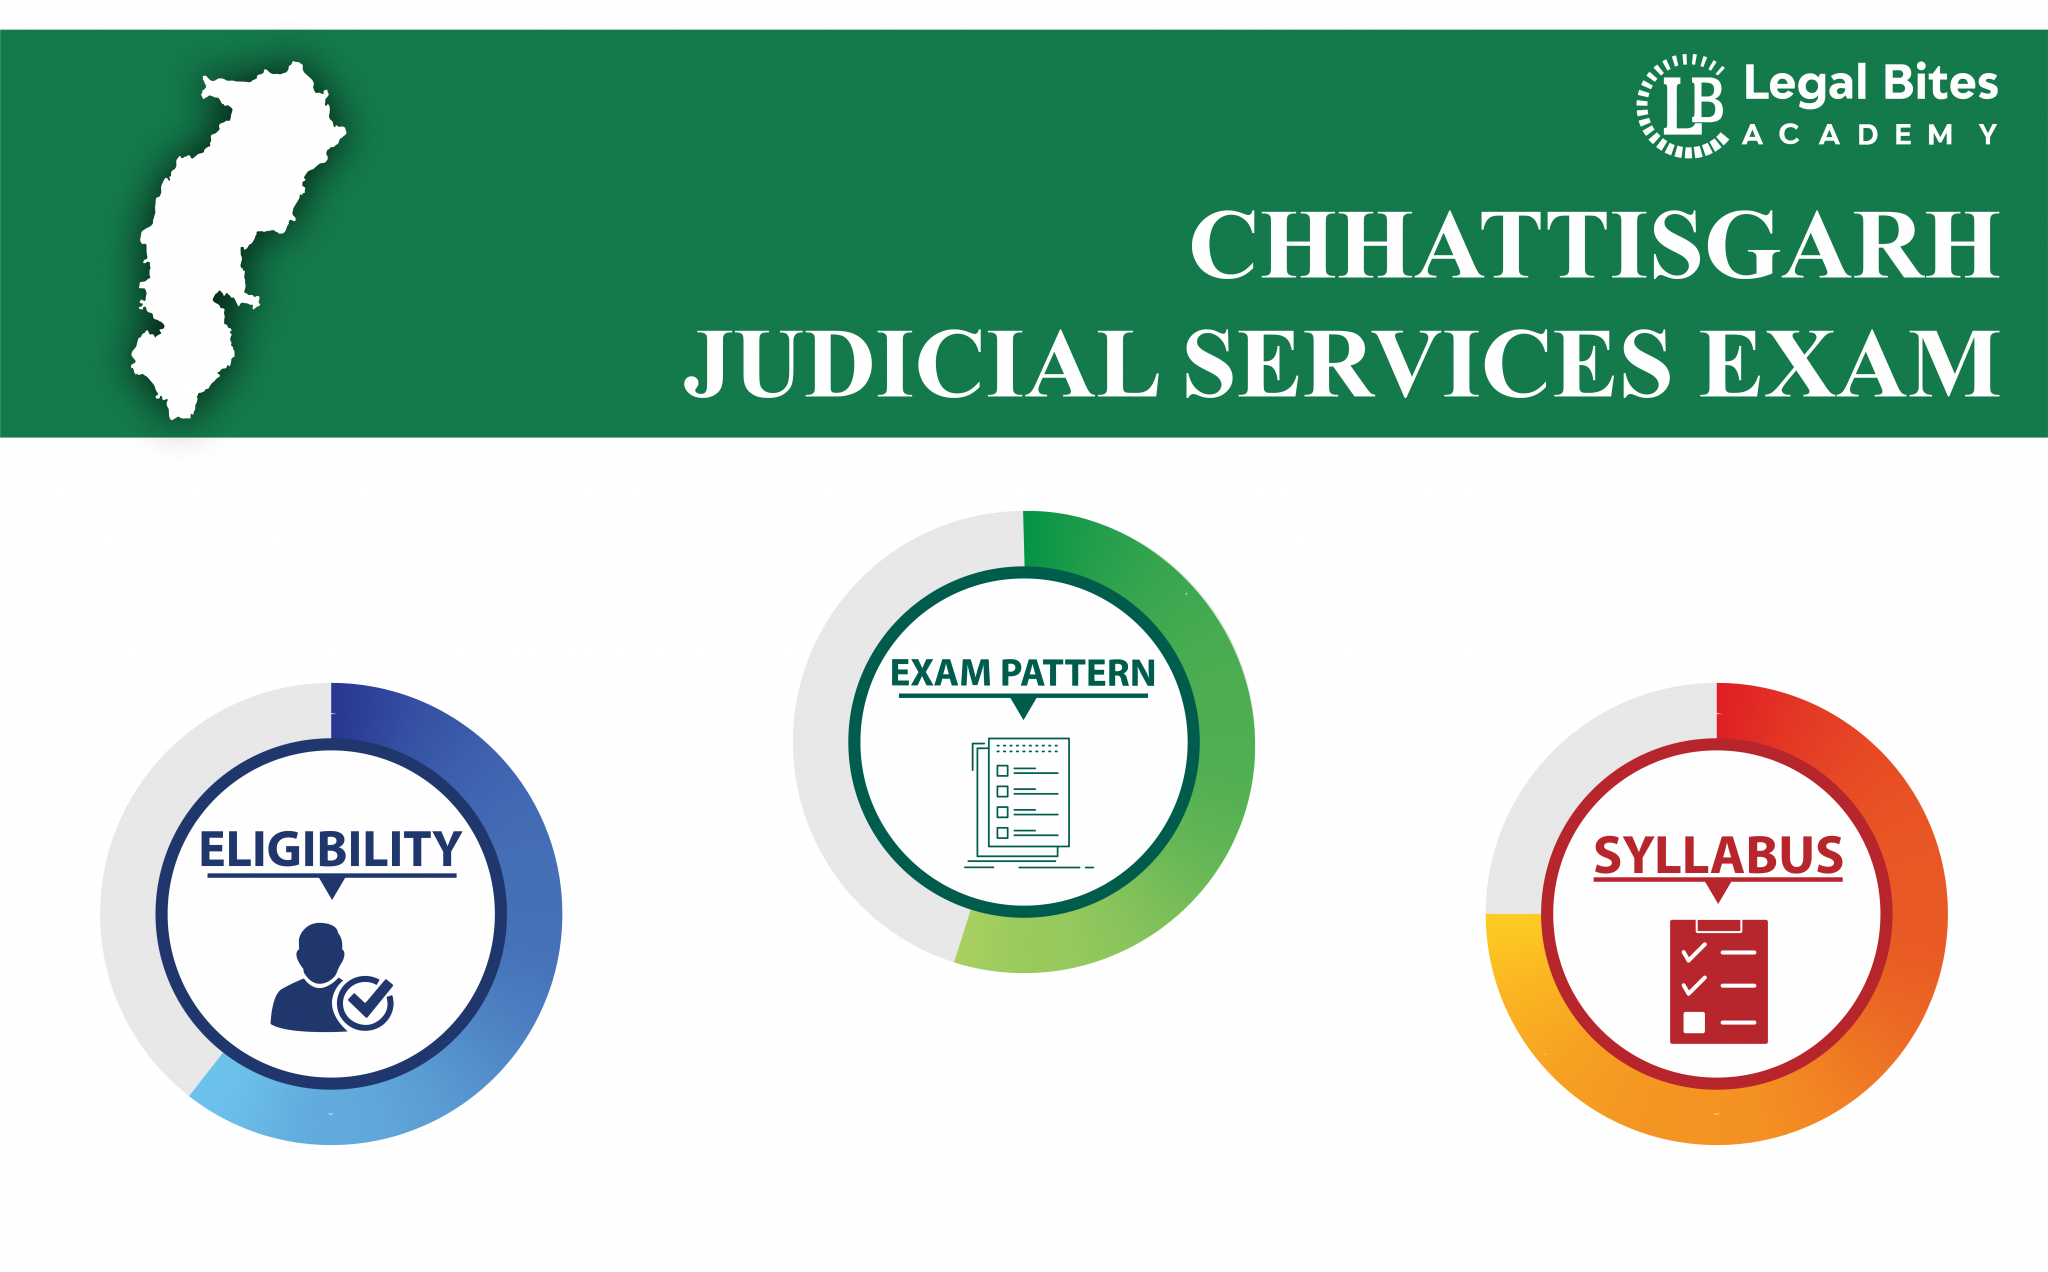 Chhattisgarh Judicial Services Examination Eligibility, Pattern, and